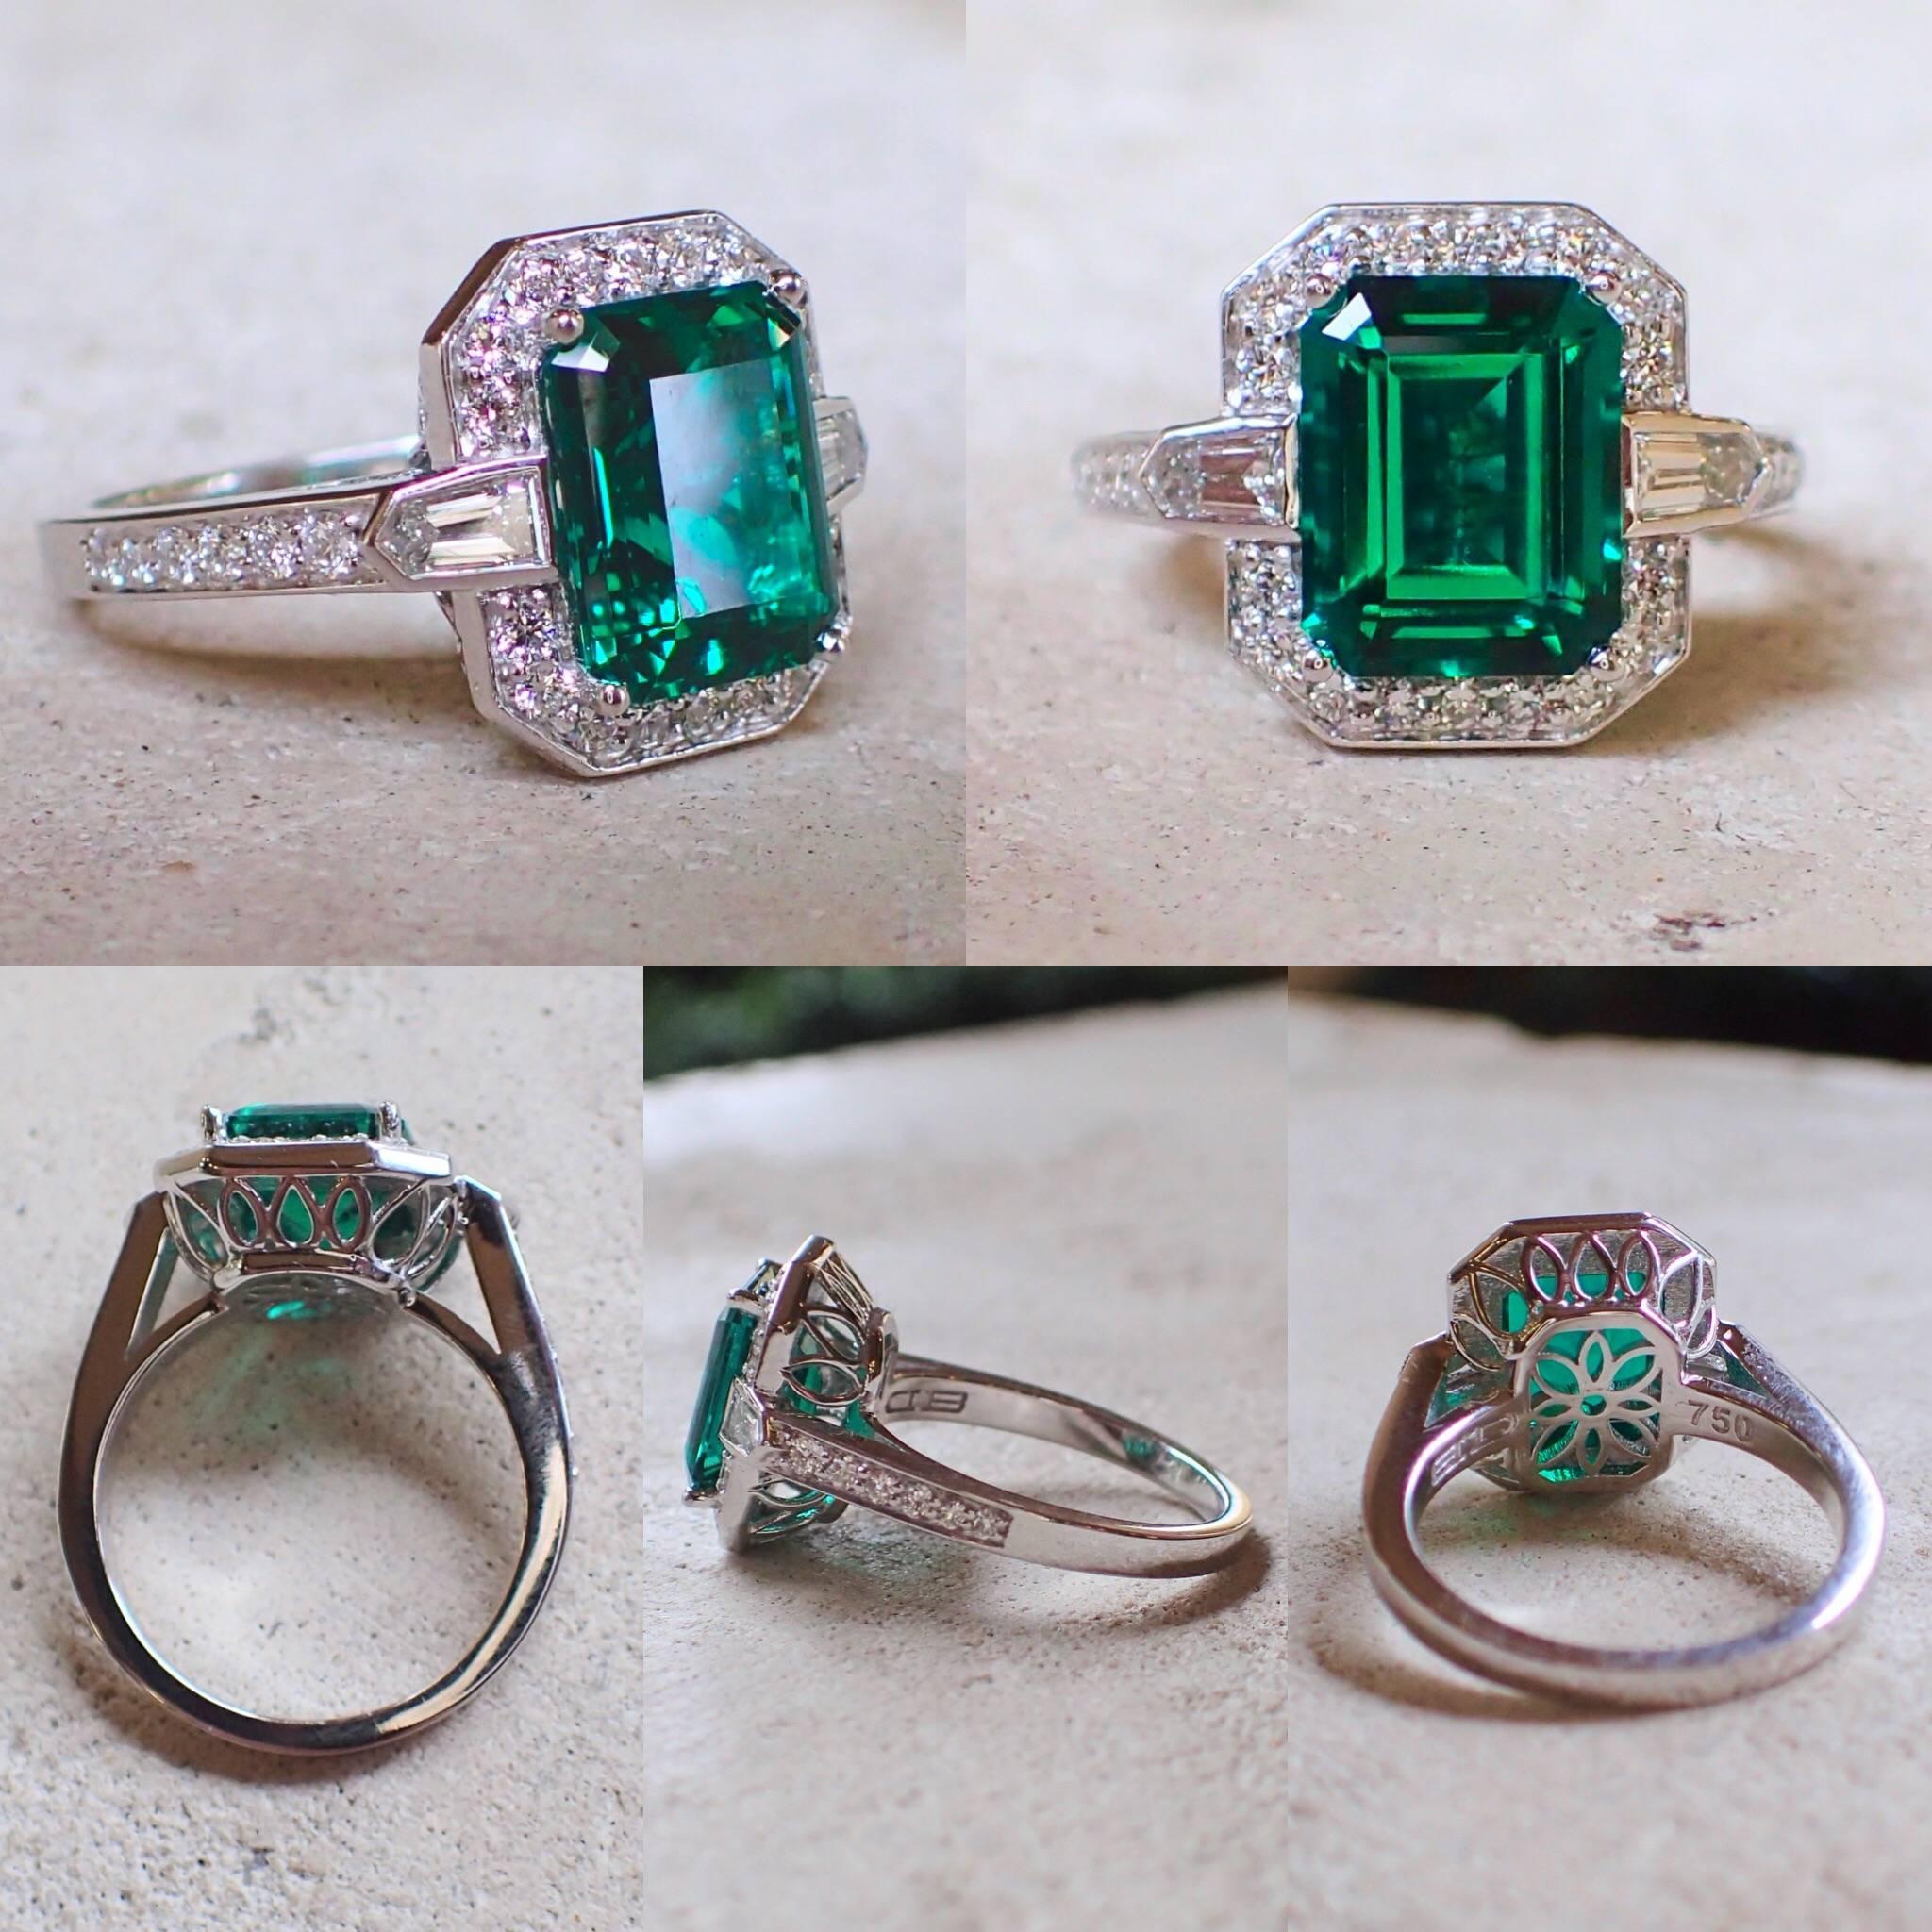 Emerald Cut 18 Karat Gold Ring 2.83 Carat Chatham-Created Emerald and 0.70 Carat of Diamond